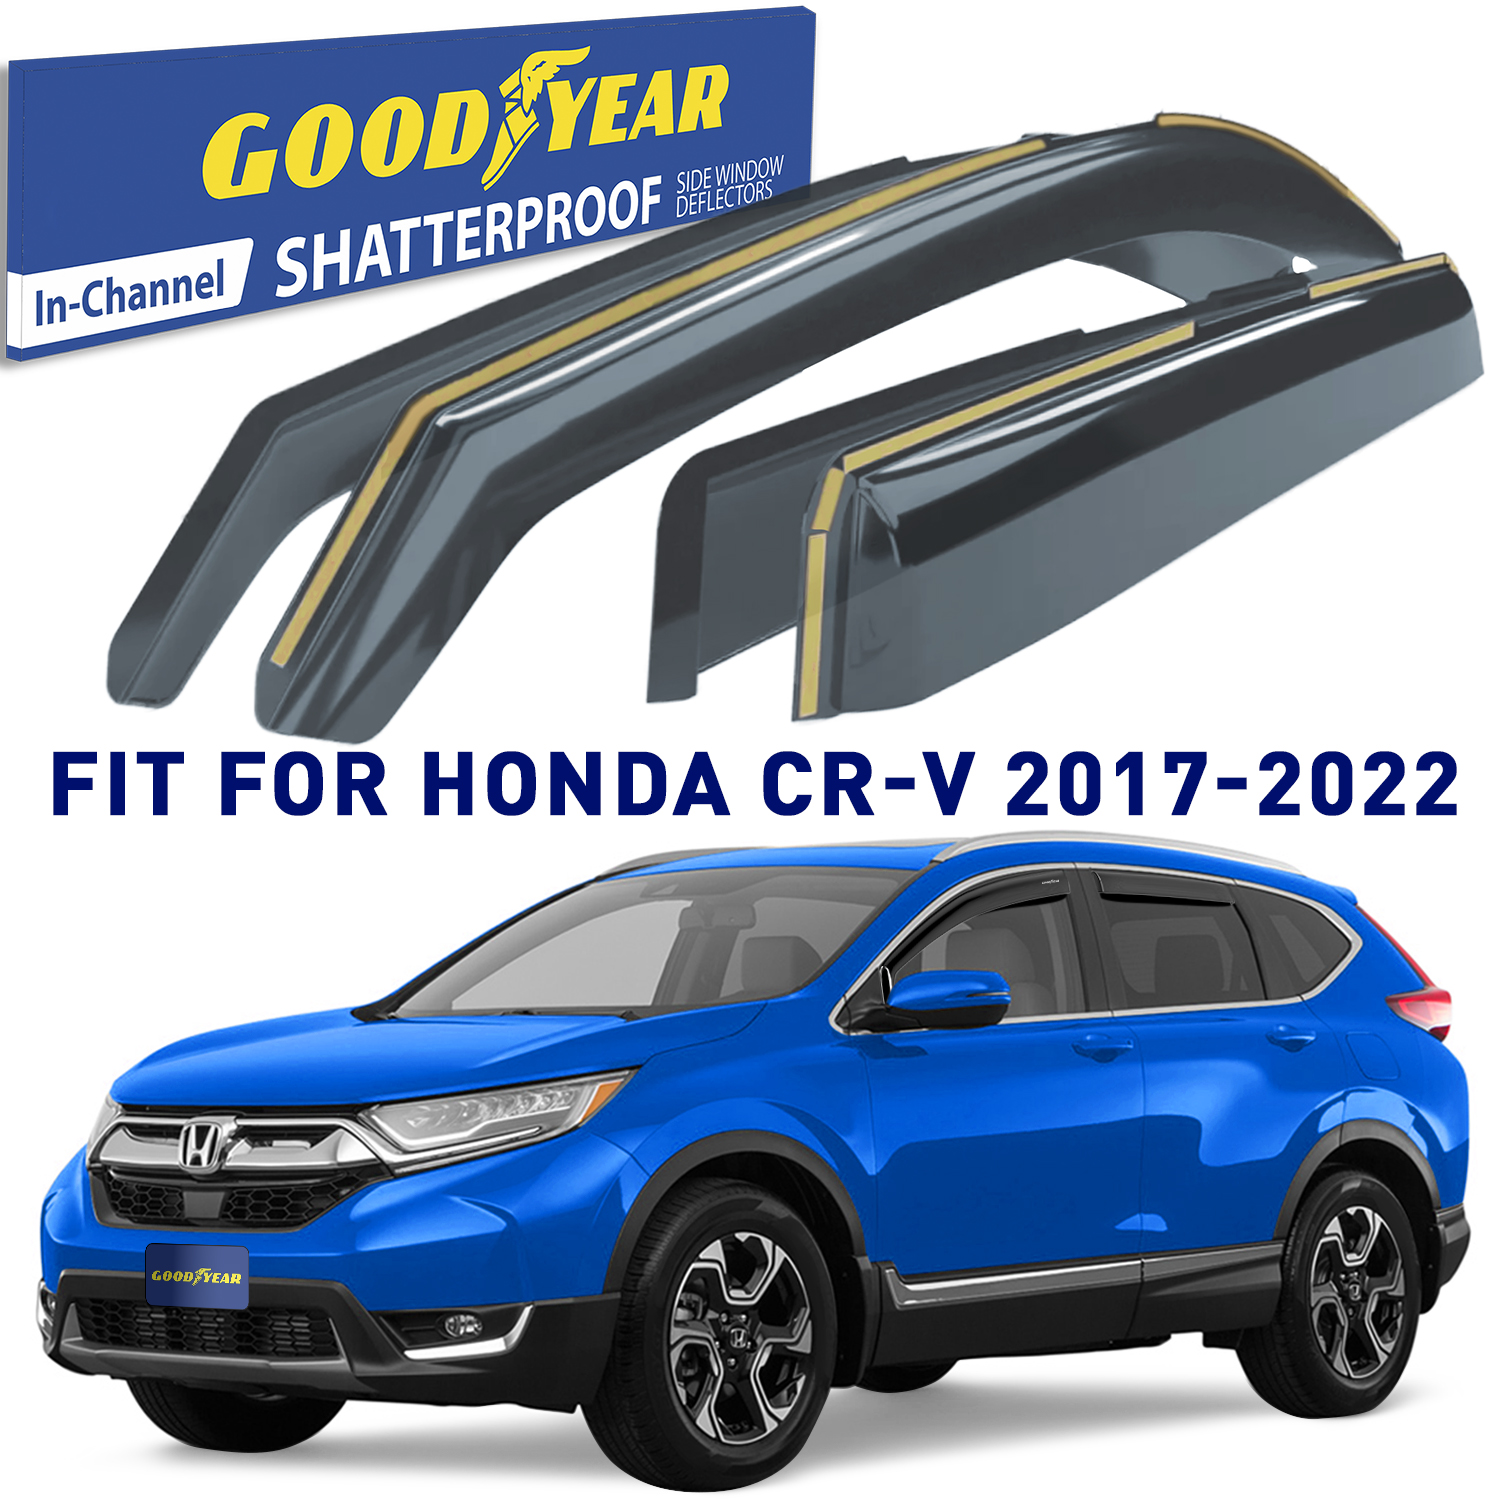 Goodyear Shatterproof Window Deflectors For 2017-2022 Honda CR-V